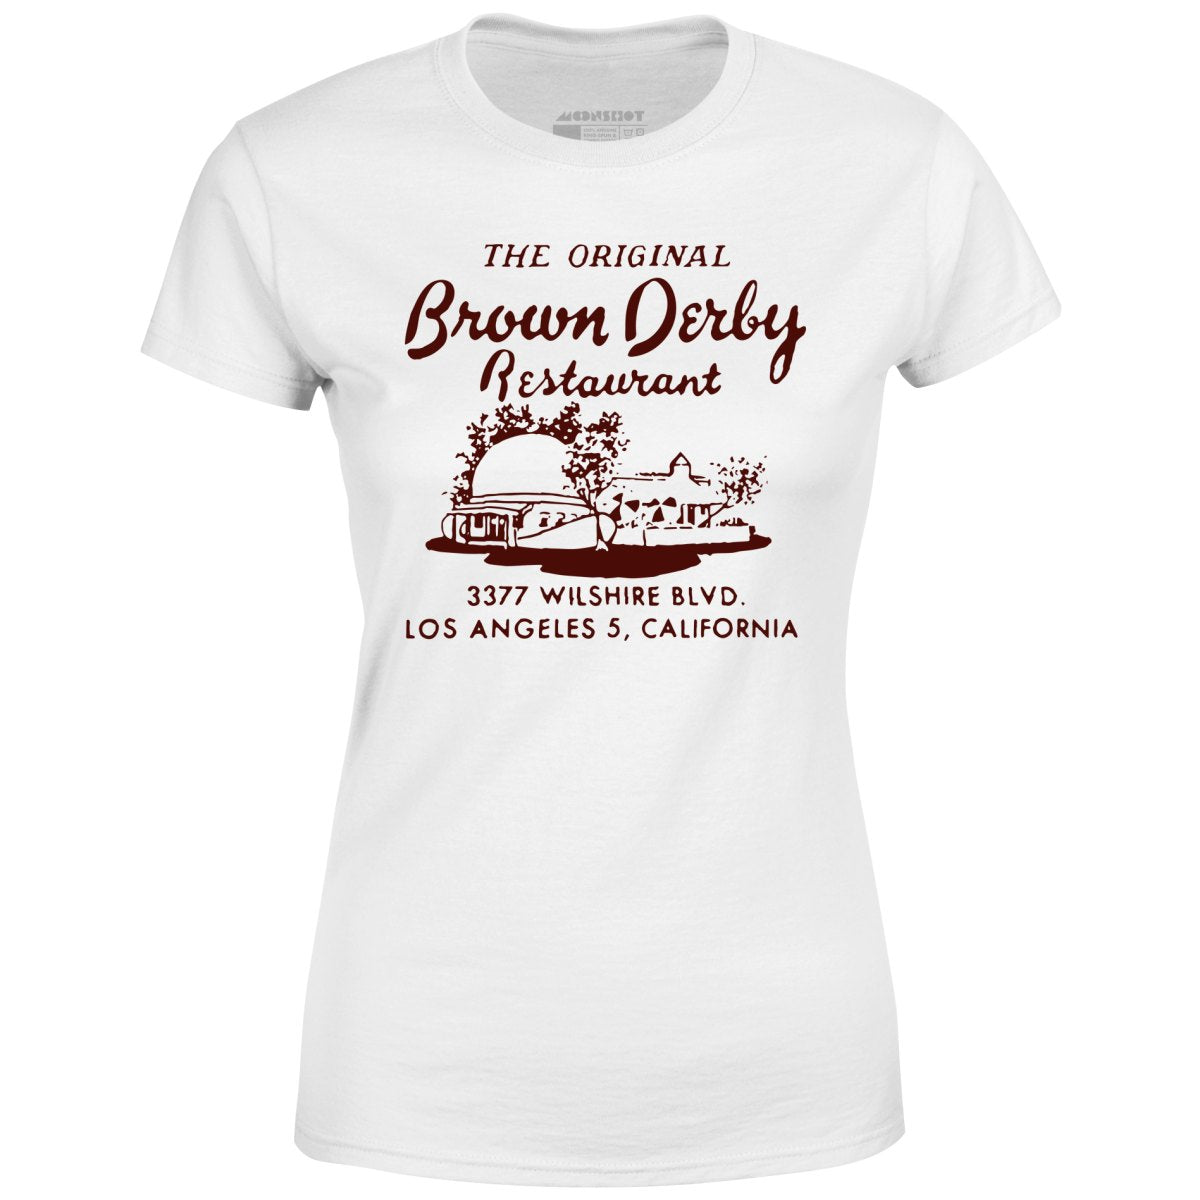 Brown Derby v2 - Los Angeles, CA - Vintage Restaurant - Women's T-Shirt